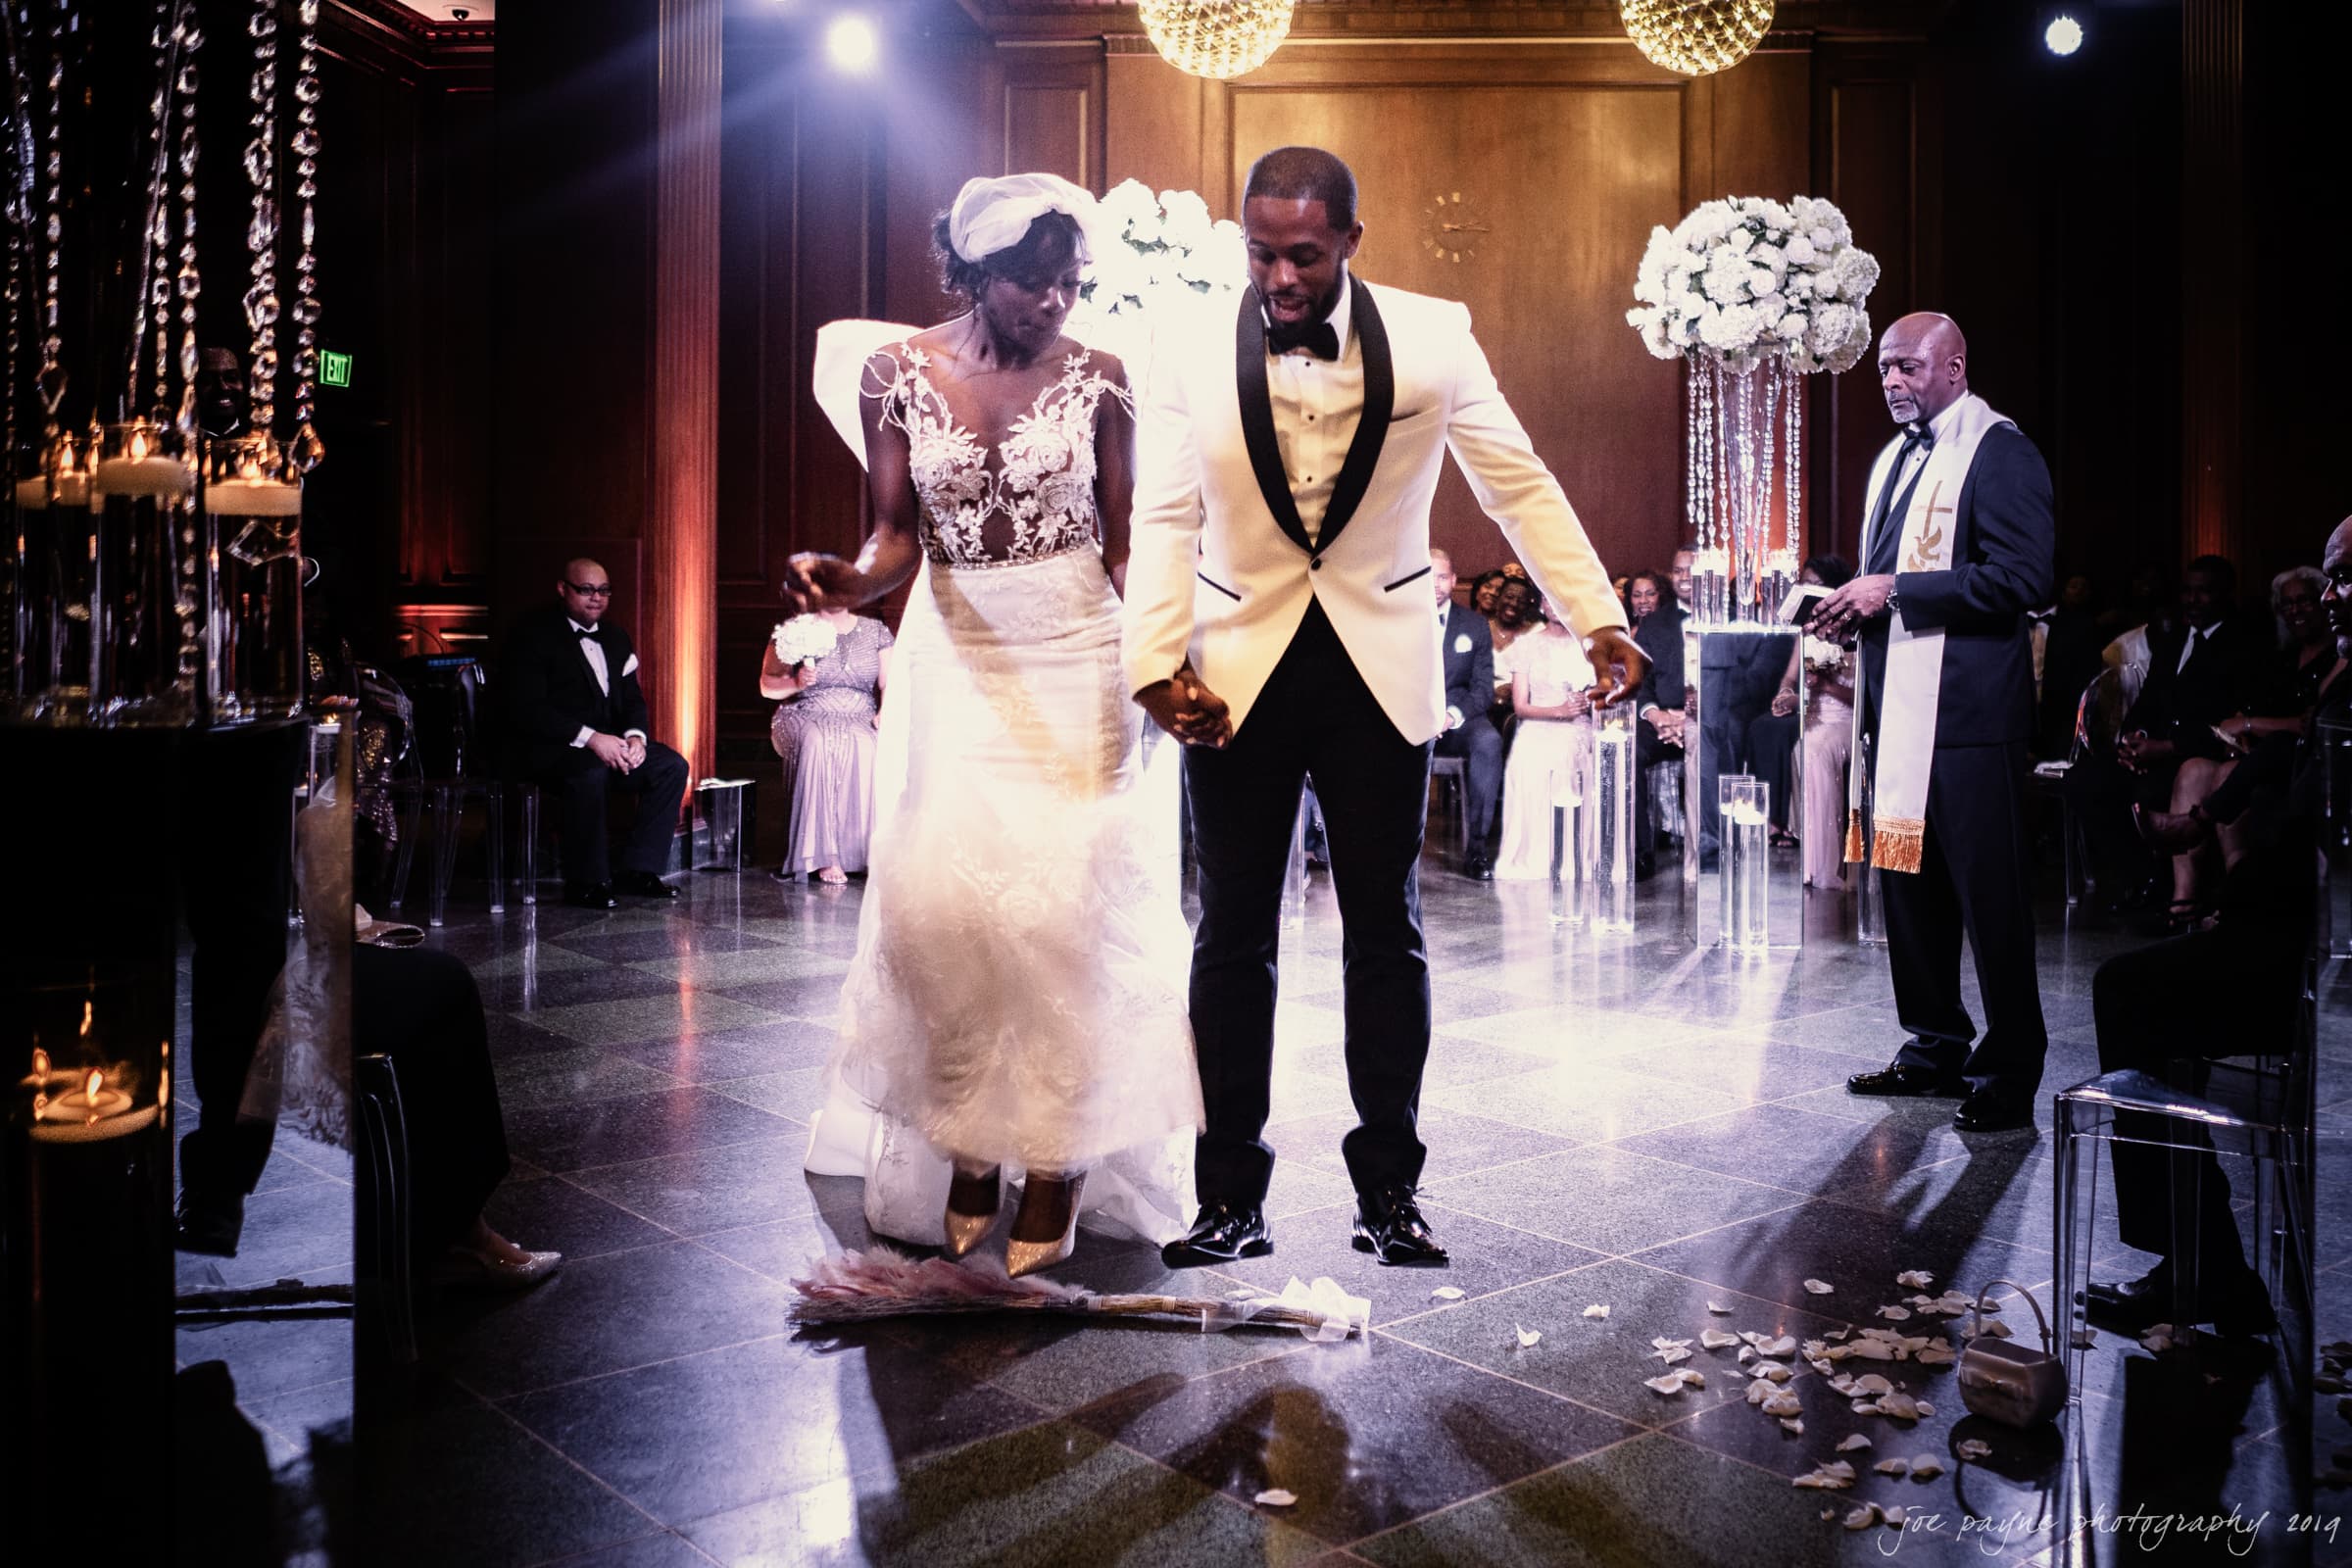 21c museum hotel durham wedding – kortne & terry